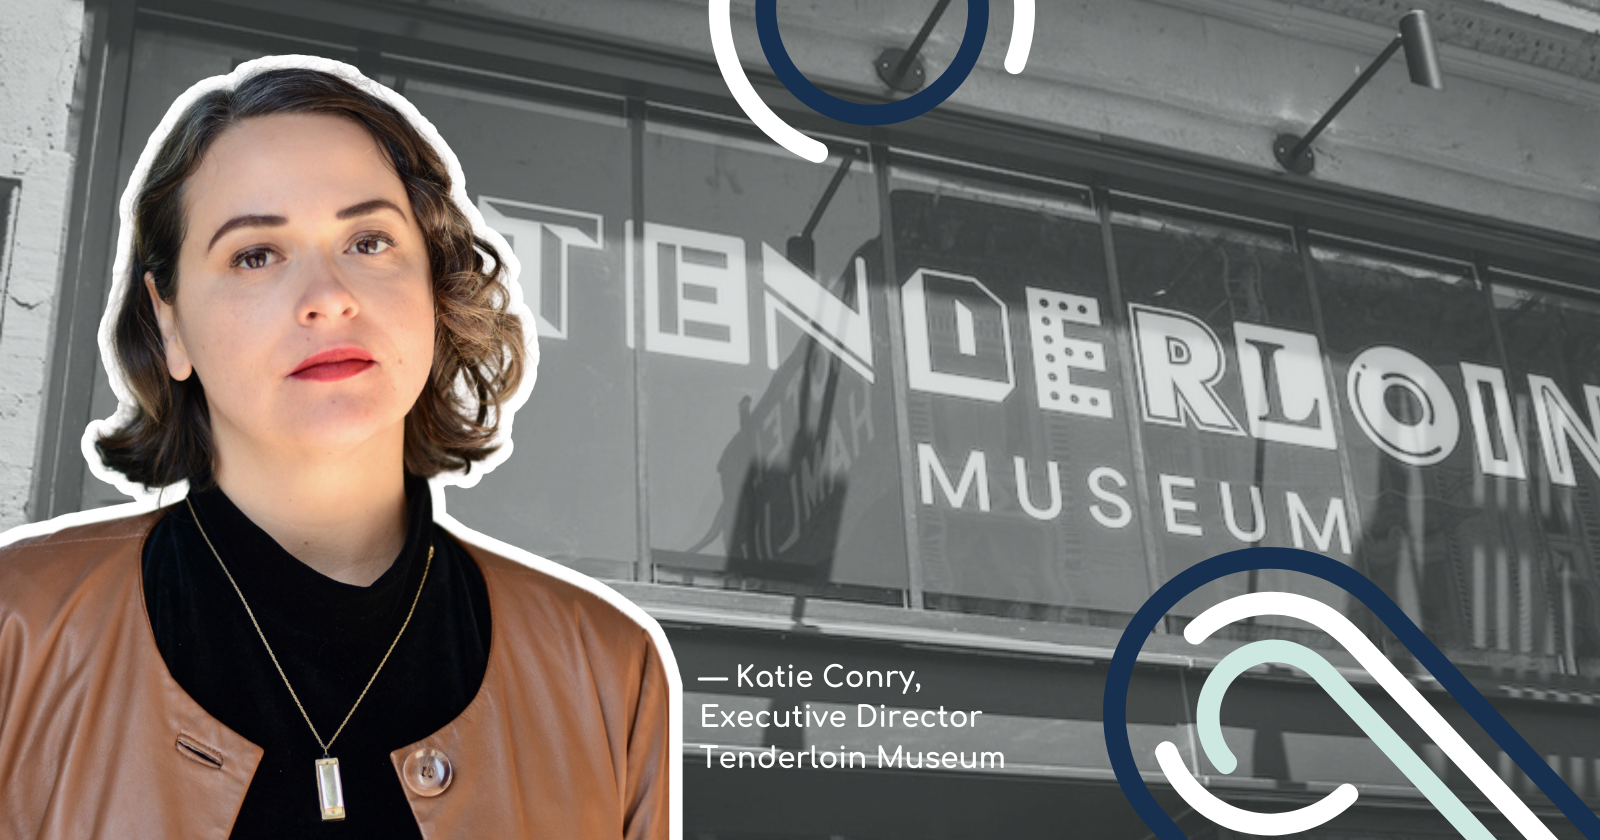 — Katie Conry, Executive Director, Tenderloin Museum